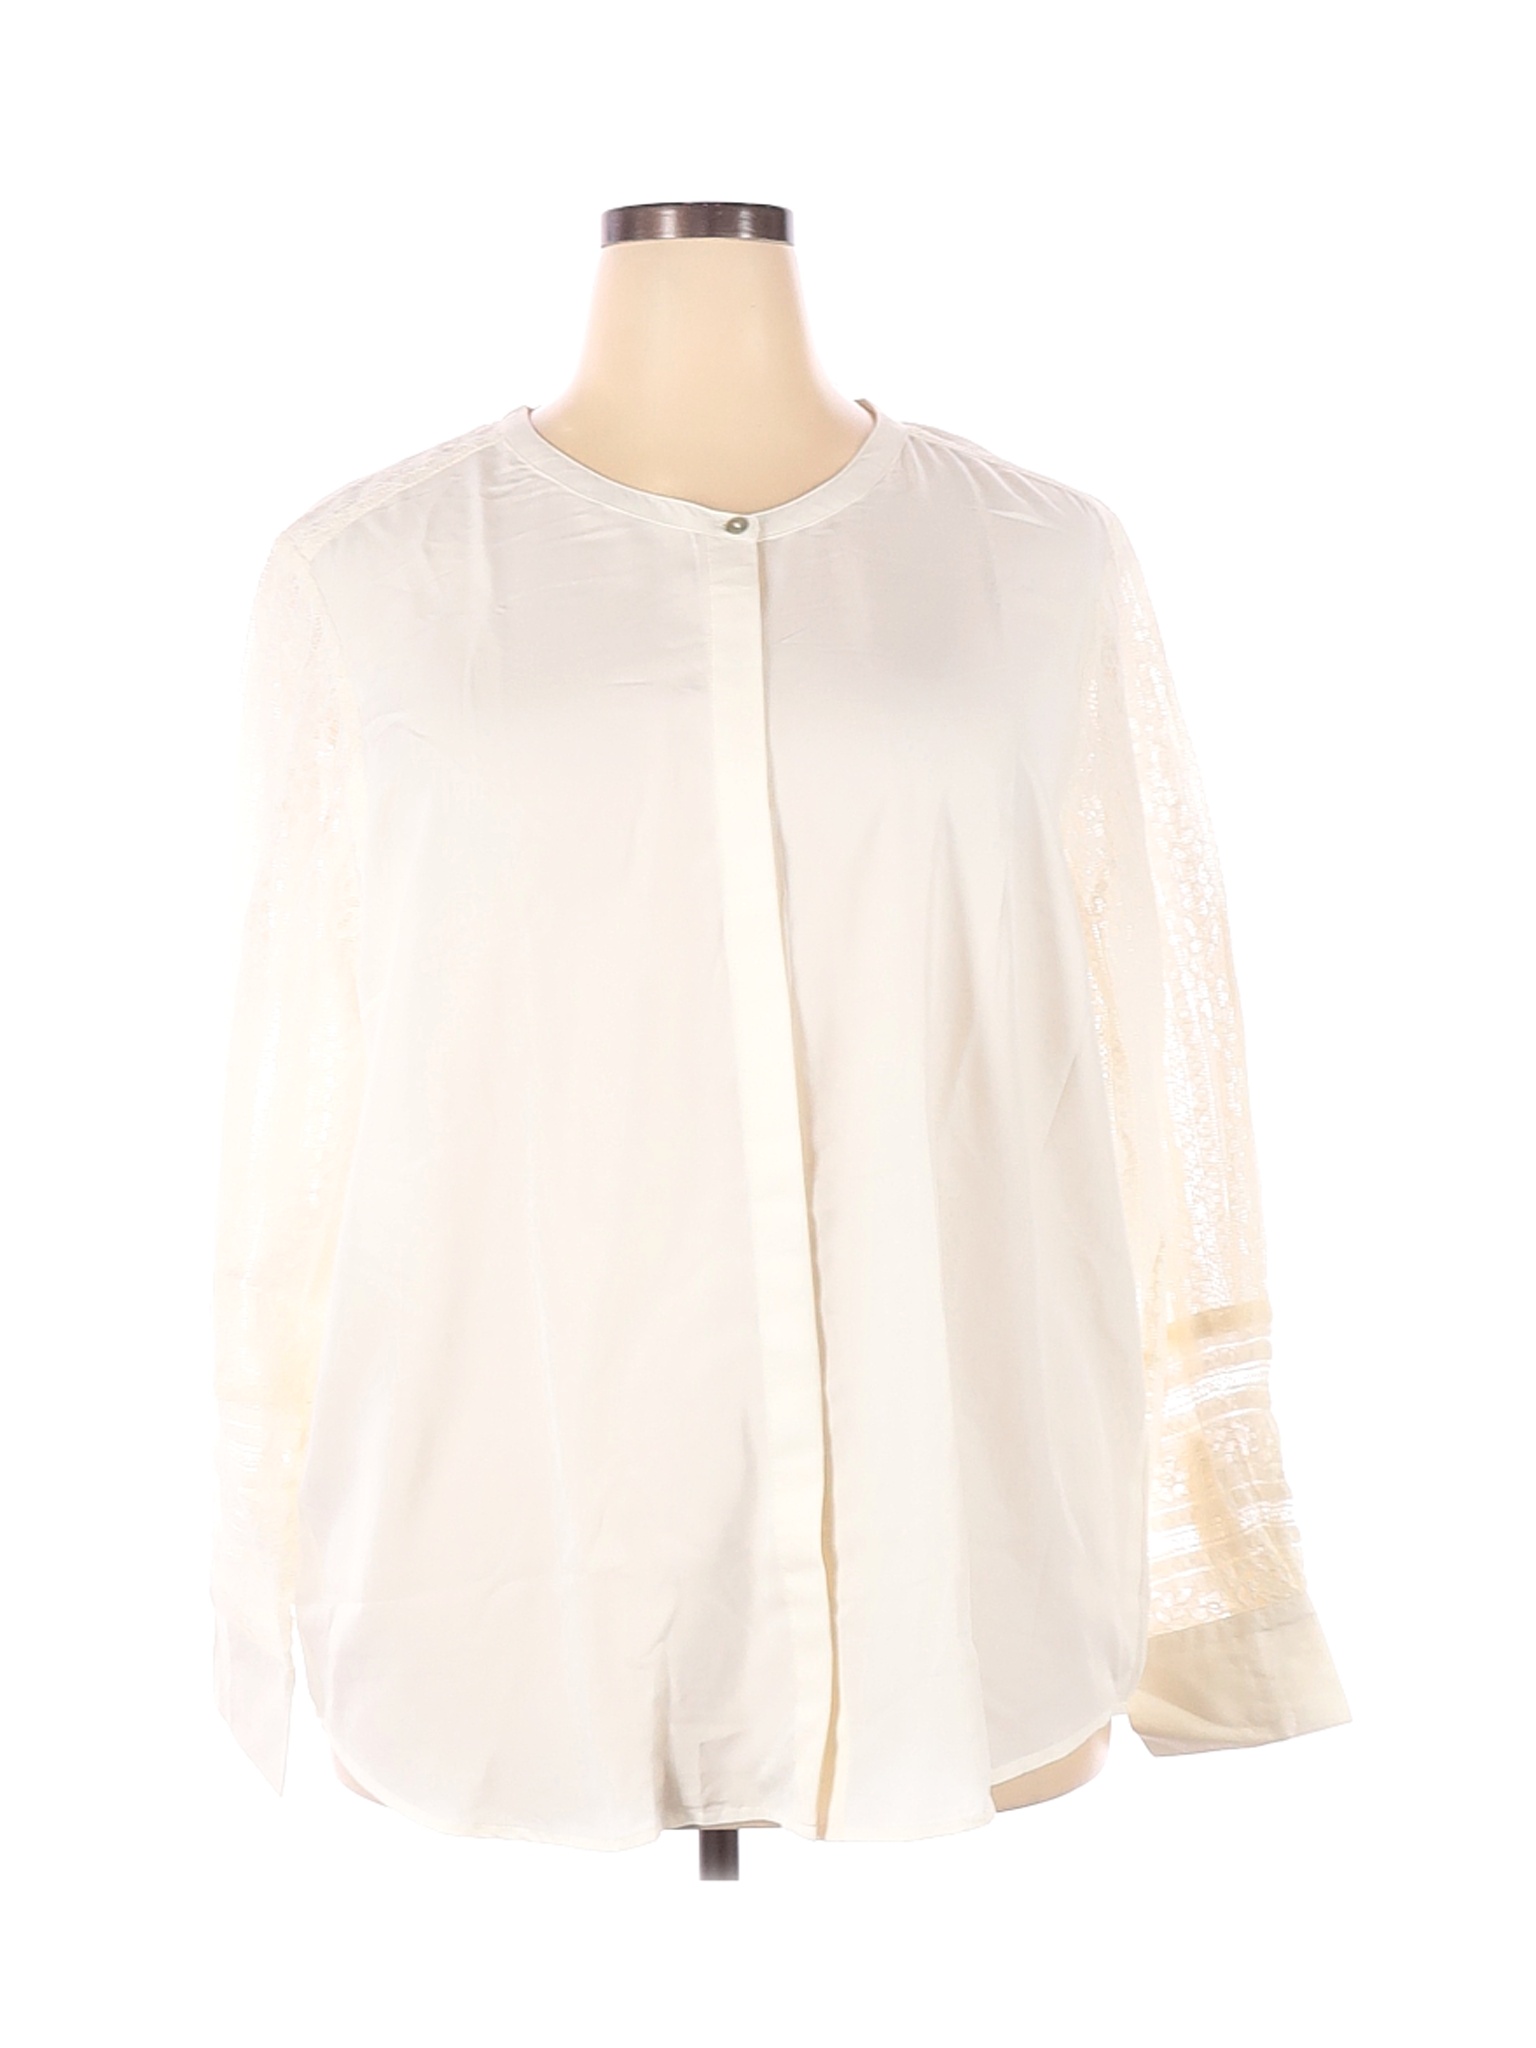 Blair Women Ivory Long Sleeve Blouse 2X Plus | eBay